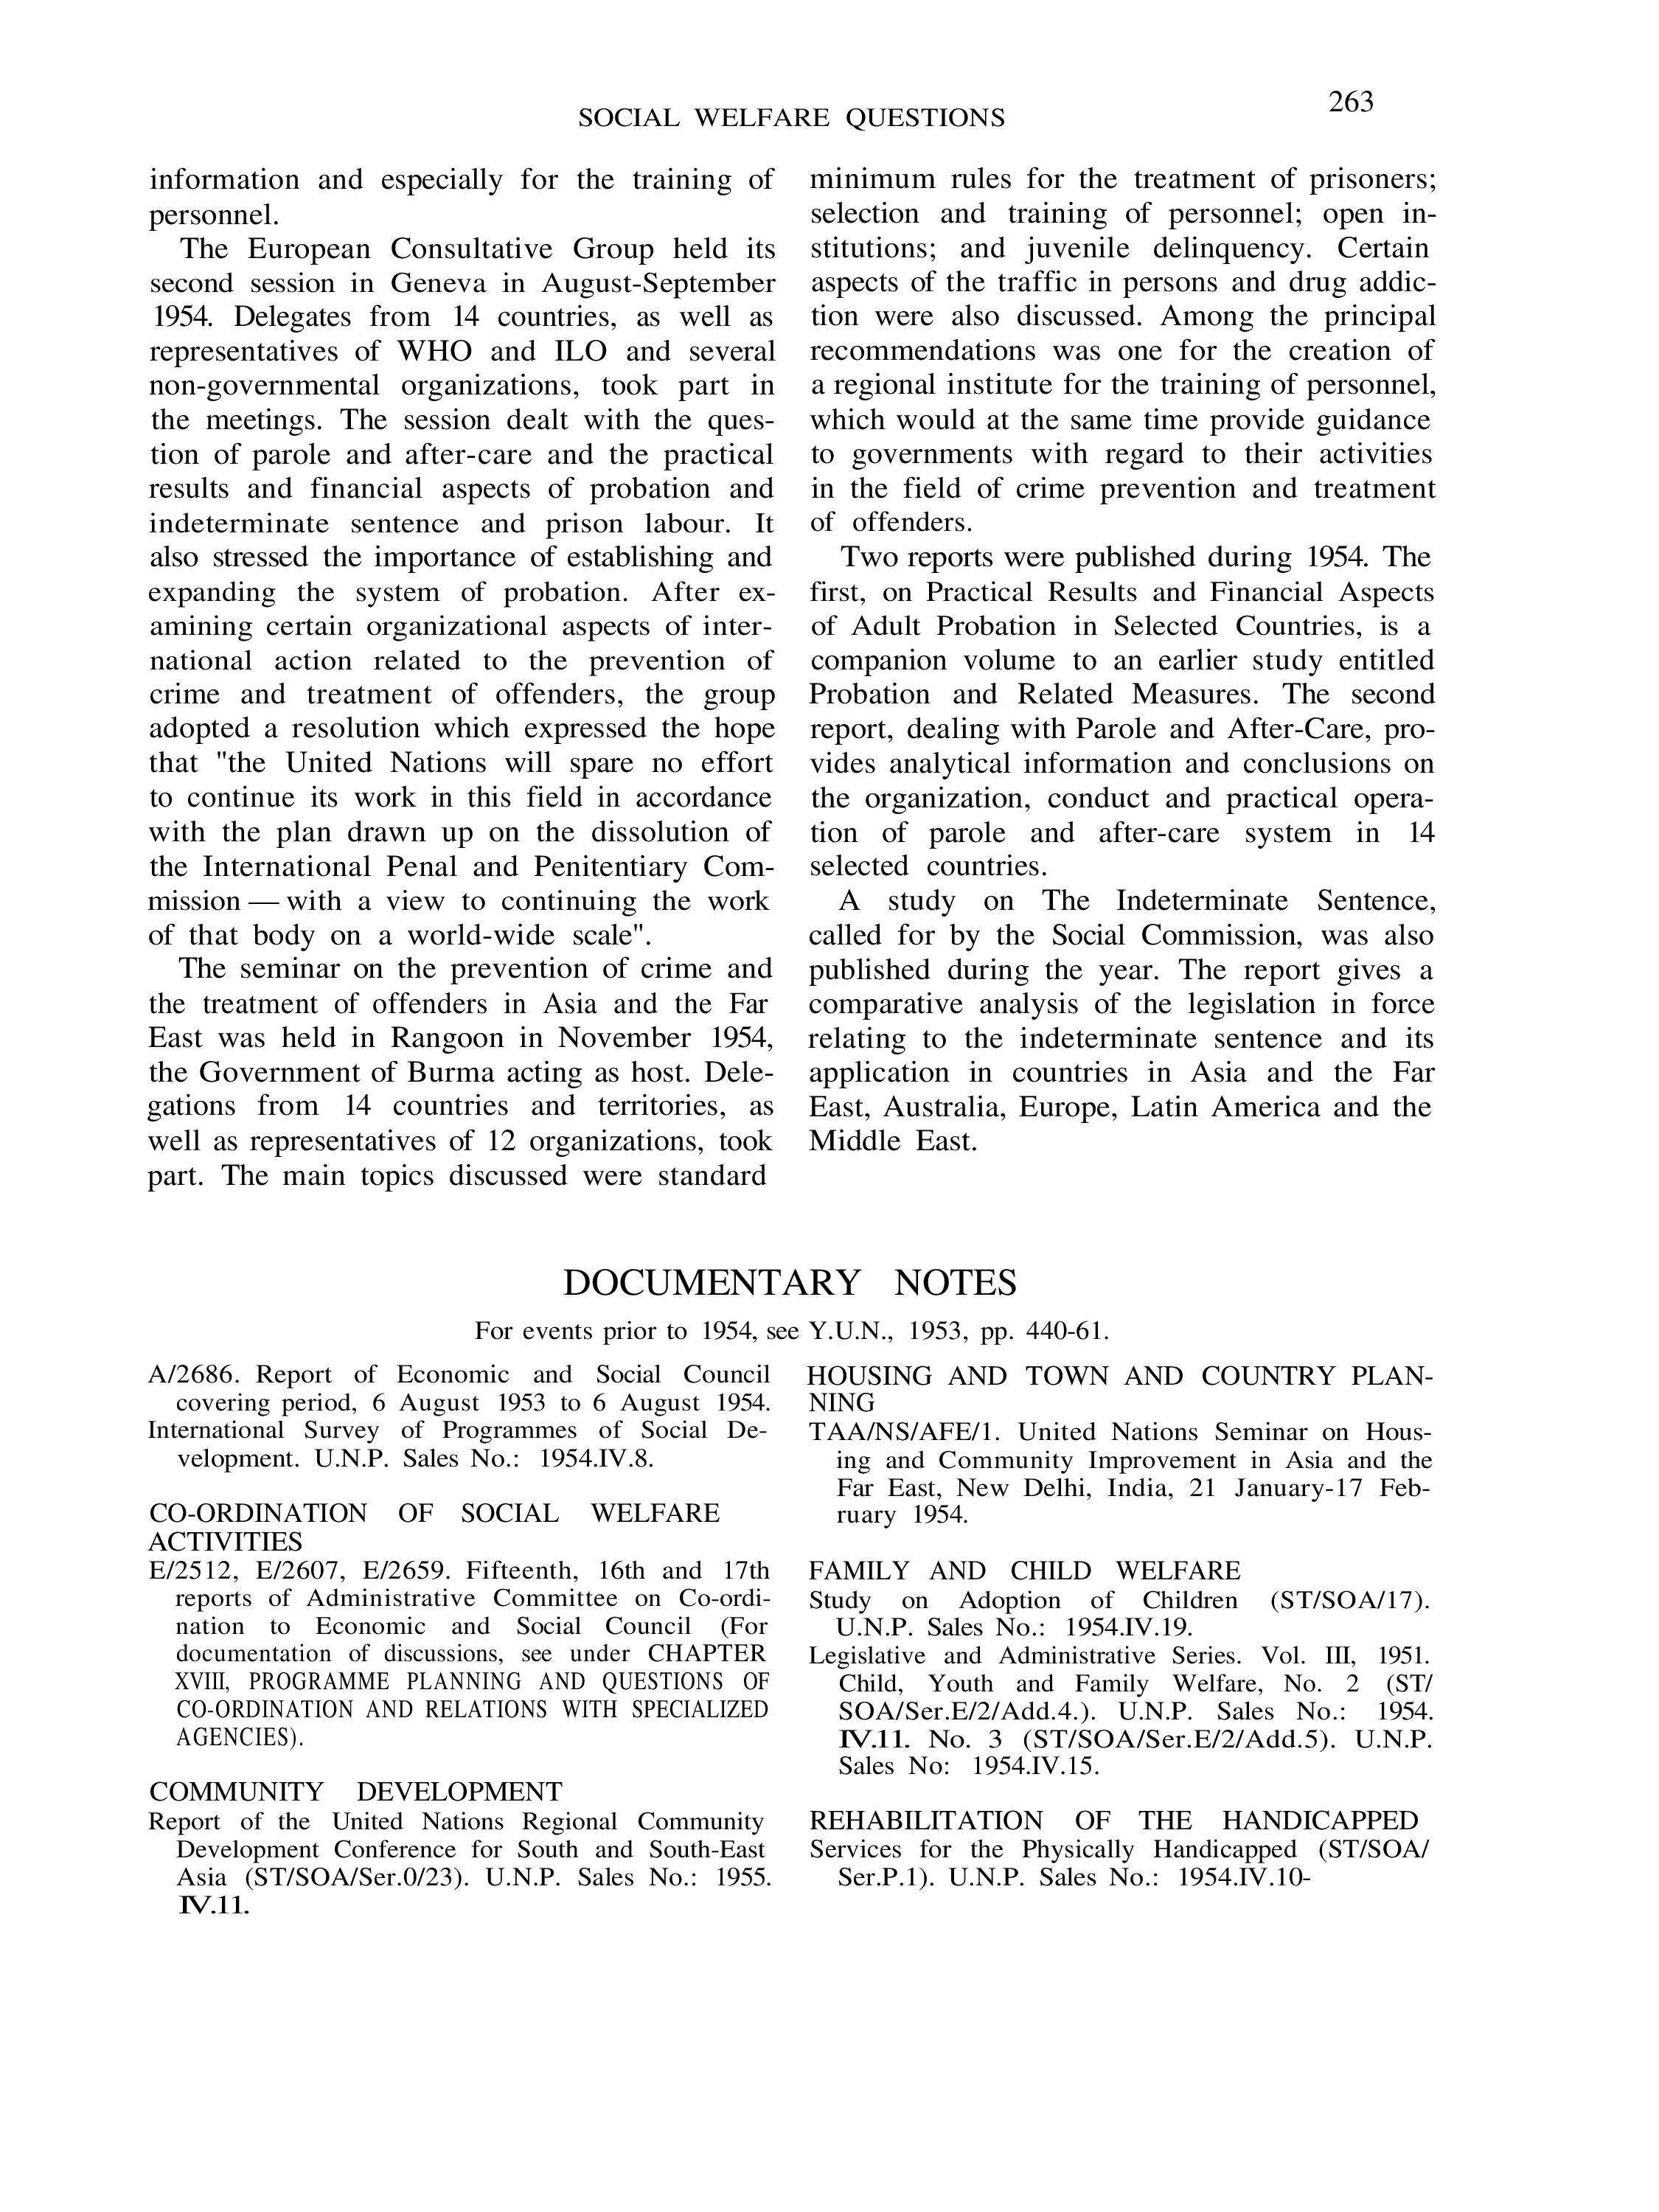 YUN Volume_Page 1954_273